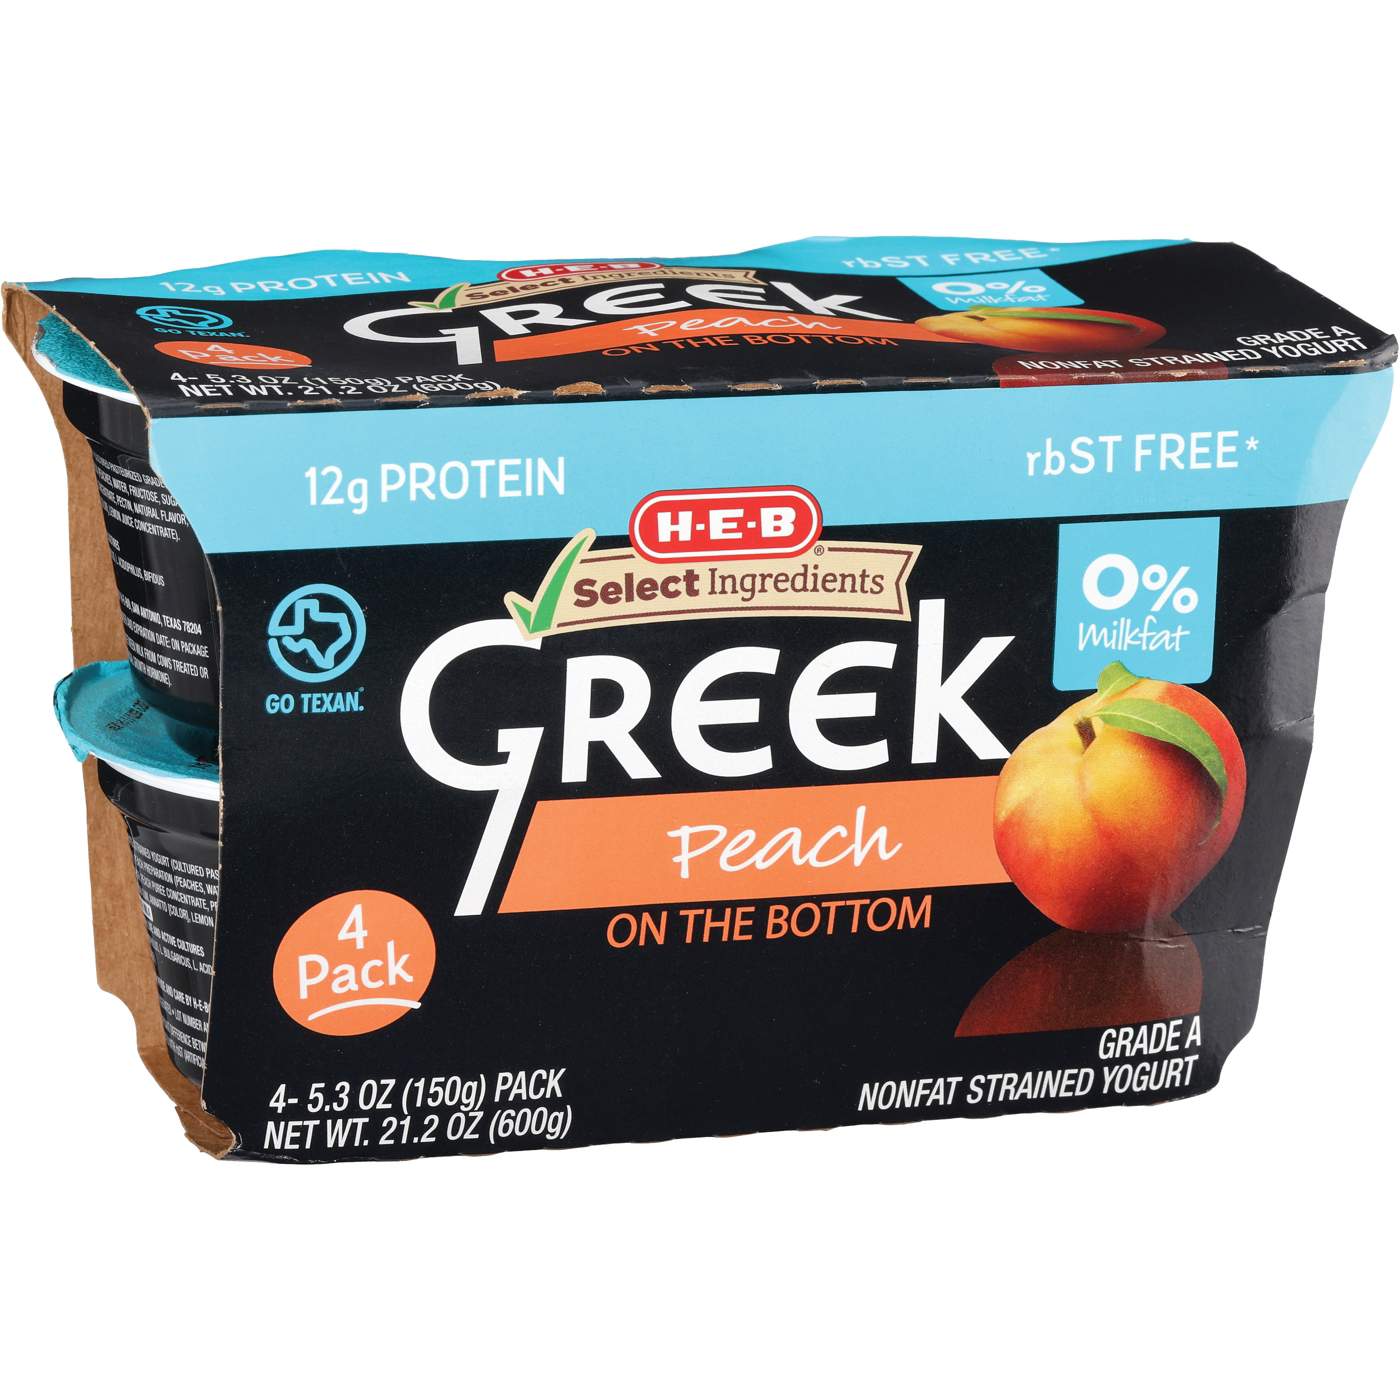 H-E-B 12g Protein Nonfat Greek Yogurt - Peach on the Bottom; image 2 of 2